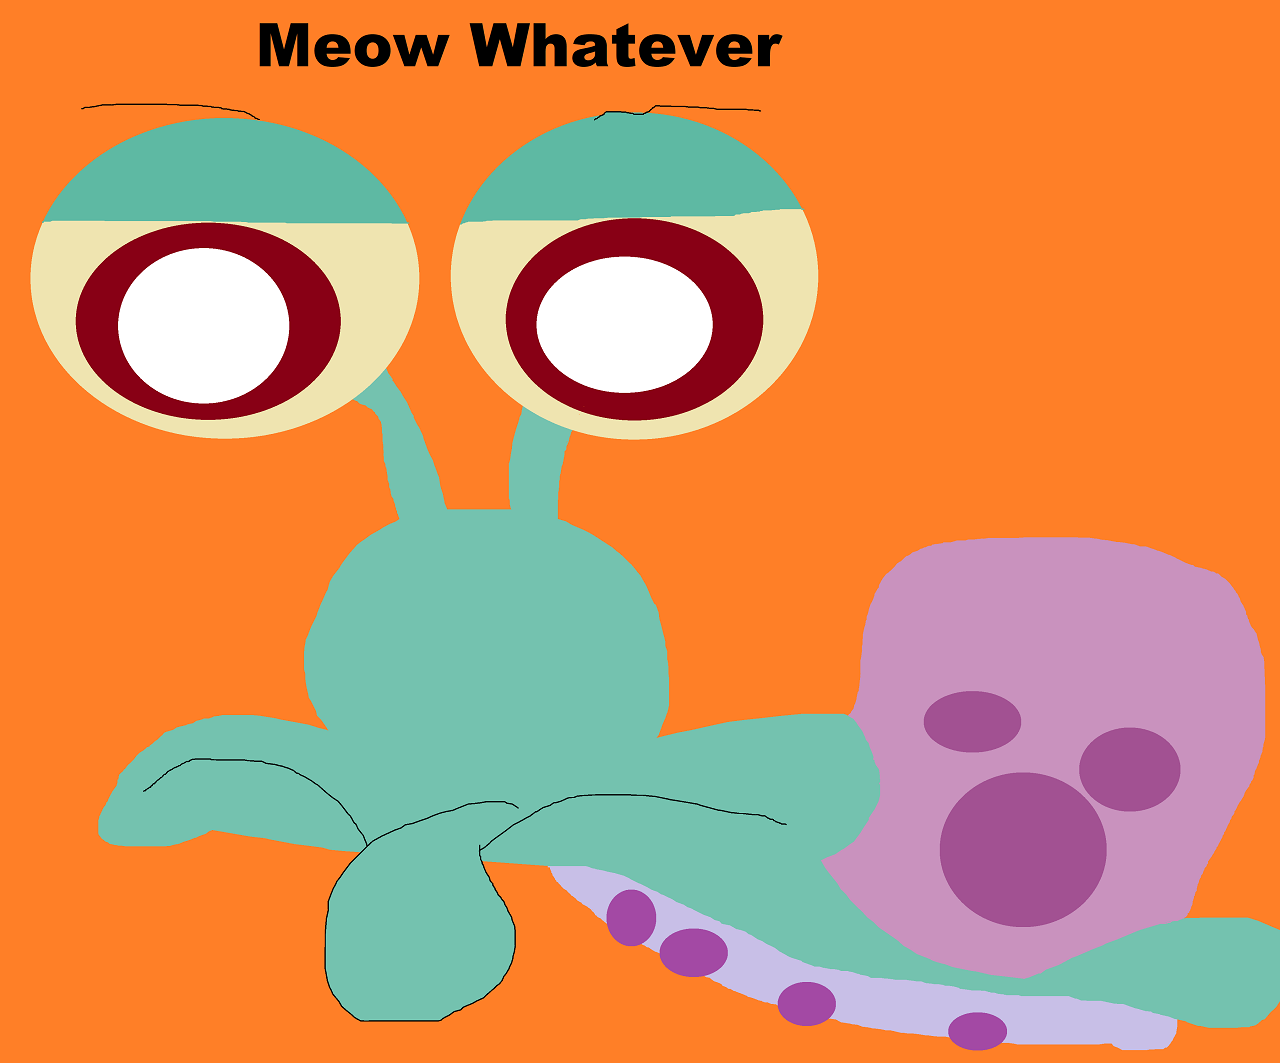 Meow Whatever by Falconlobo